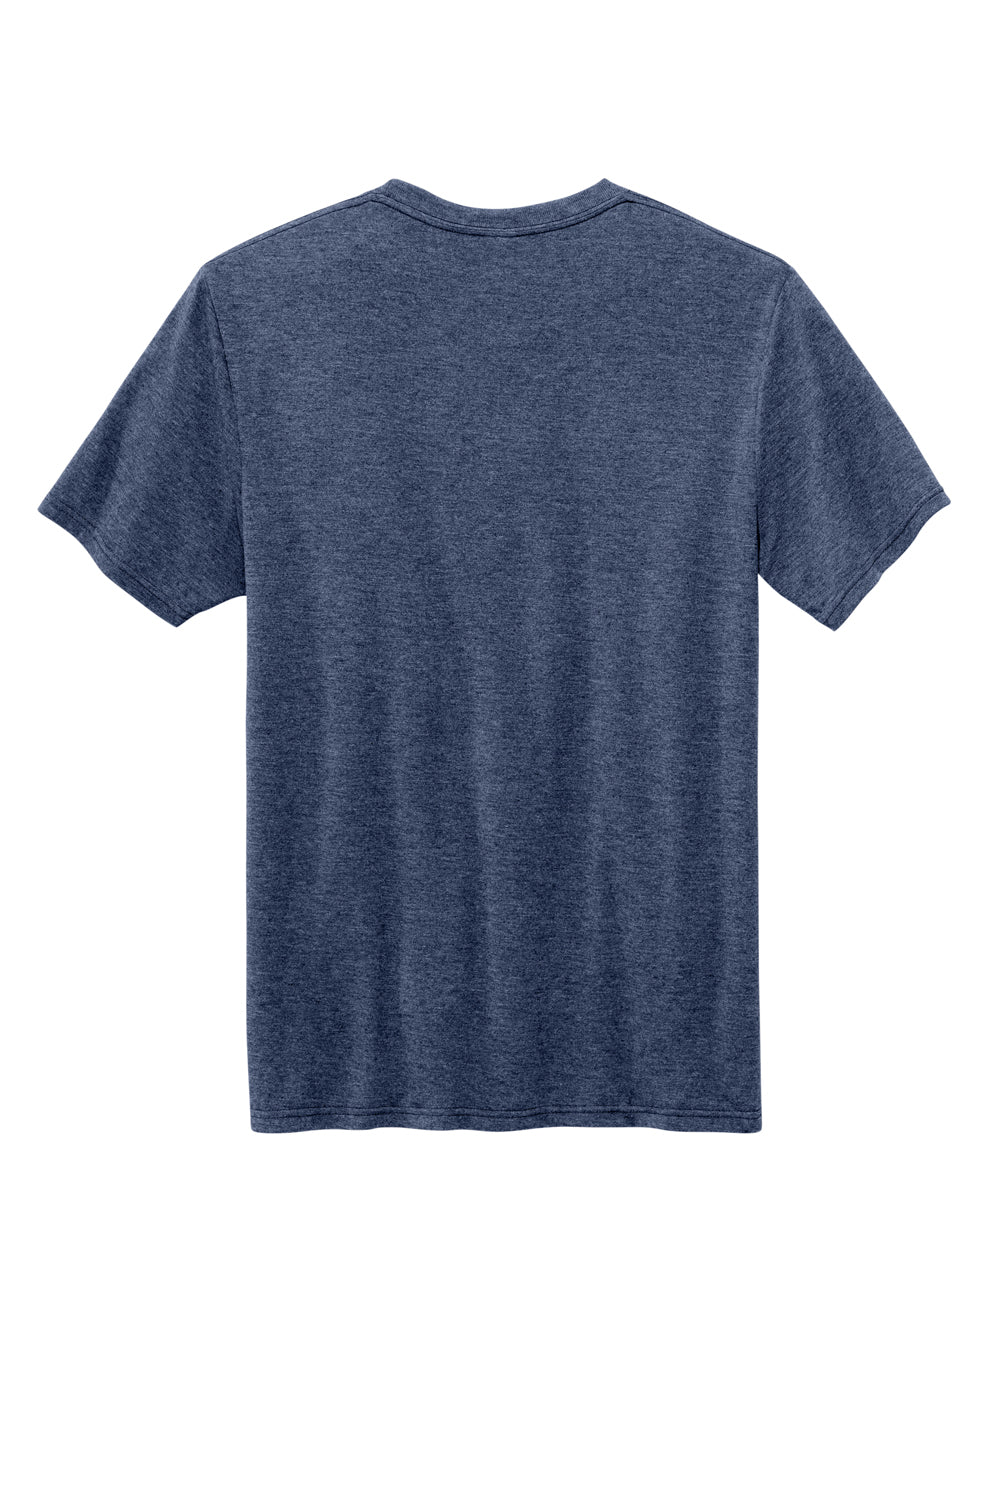 Volunteer Knitwear VL45 Daily Short Sleeve Crewneck T-Shirt Heather Navy Blue Flat Back